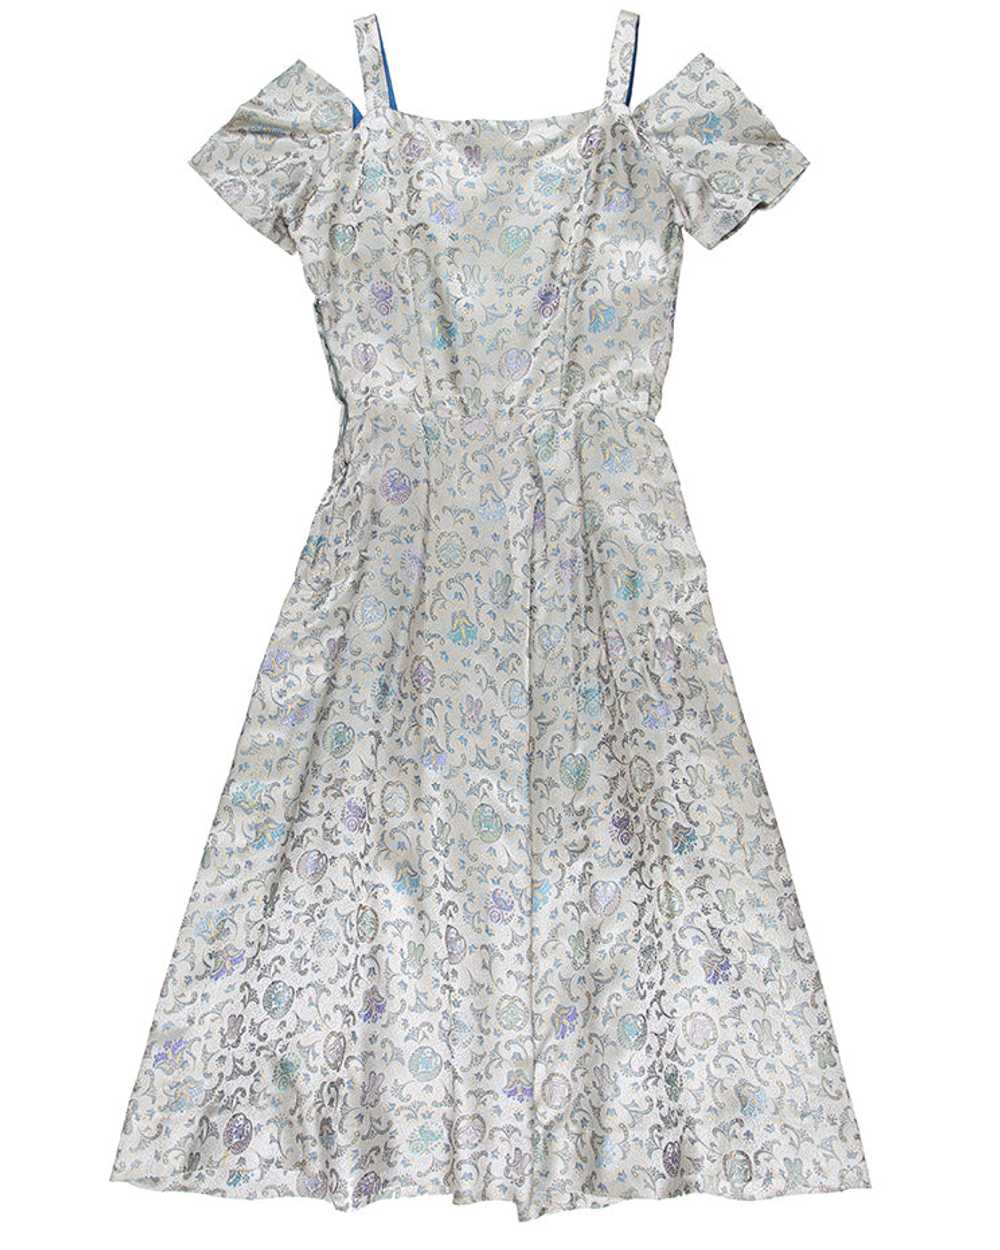 Vintage 1950s Aquamarine Brocade Evening Dress - S - image 2